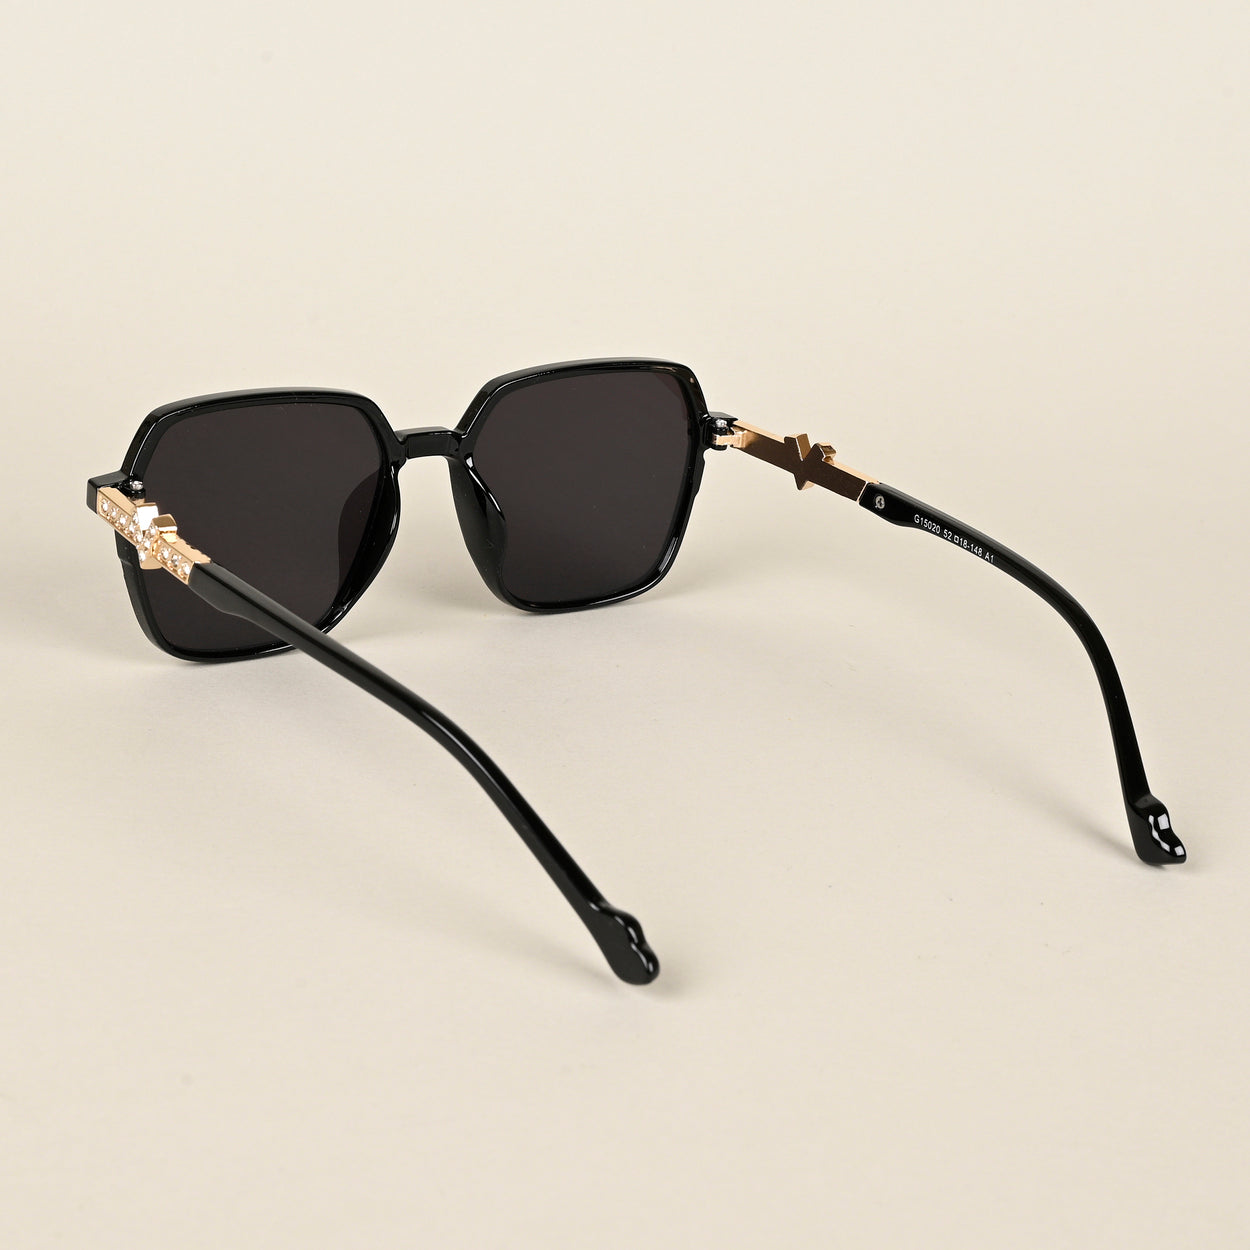 Voyage Black Square Sunglasses for Women (G15020MG4231)